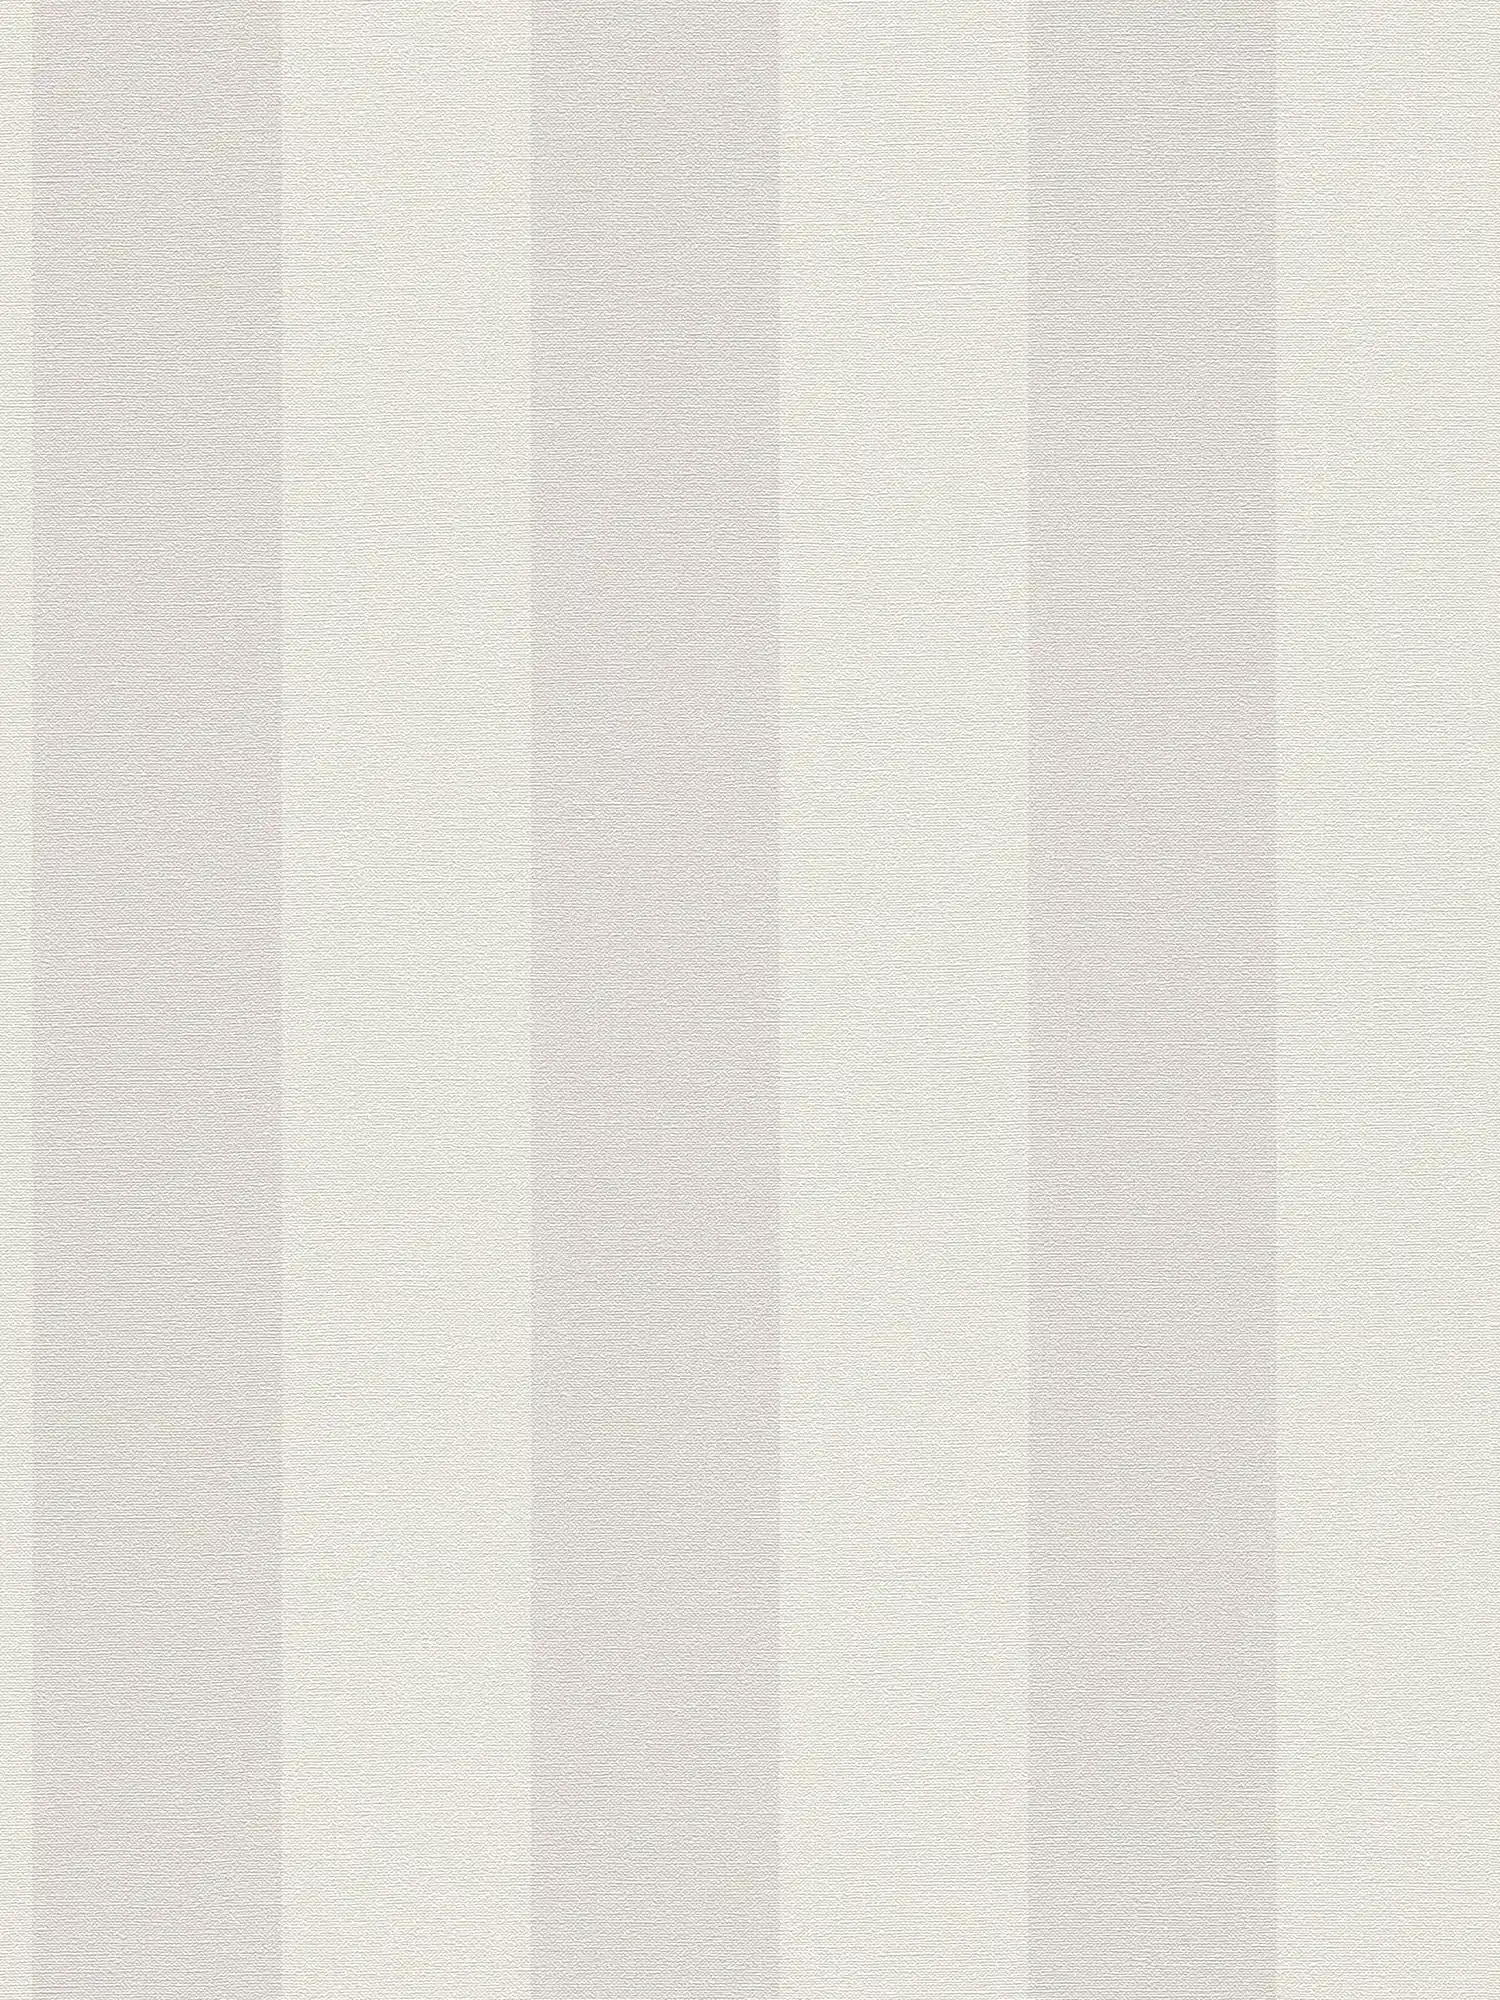 Stripes non-woven wallpaper with linen look PVC-free - grey, white
